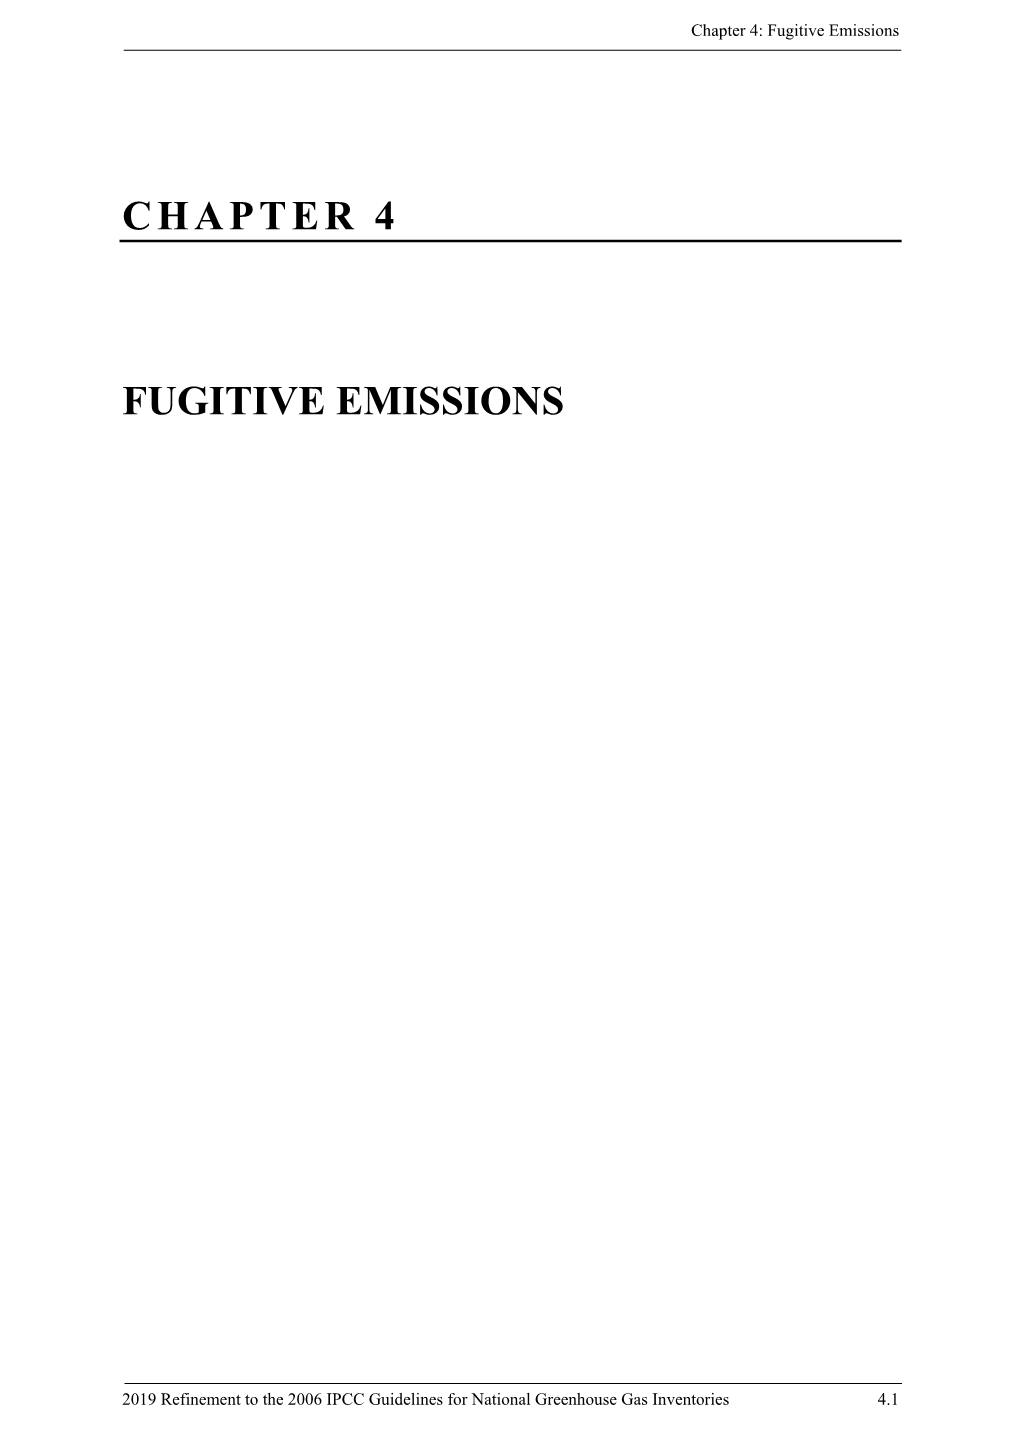 Chapter 4 Fugitive Emissions